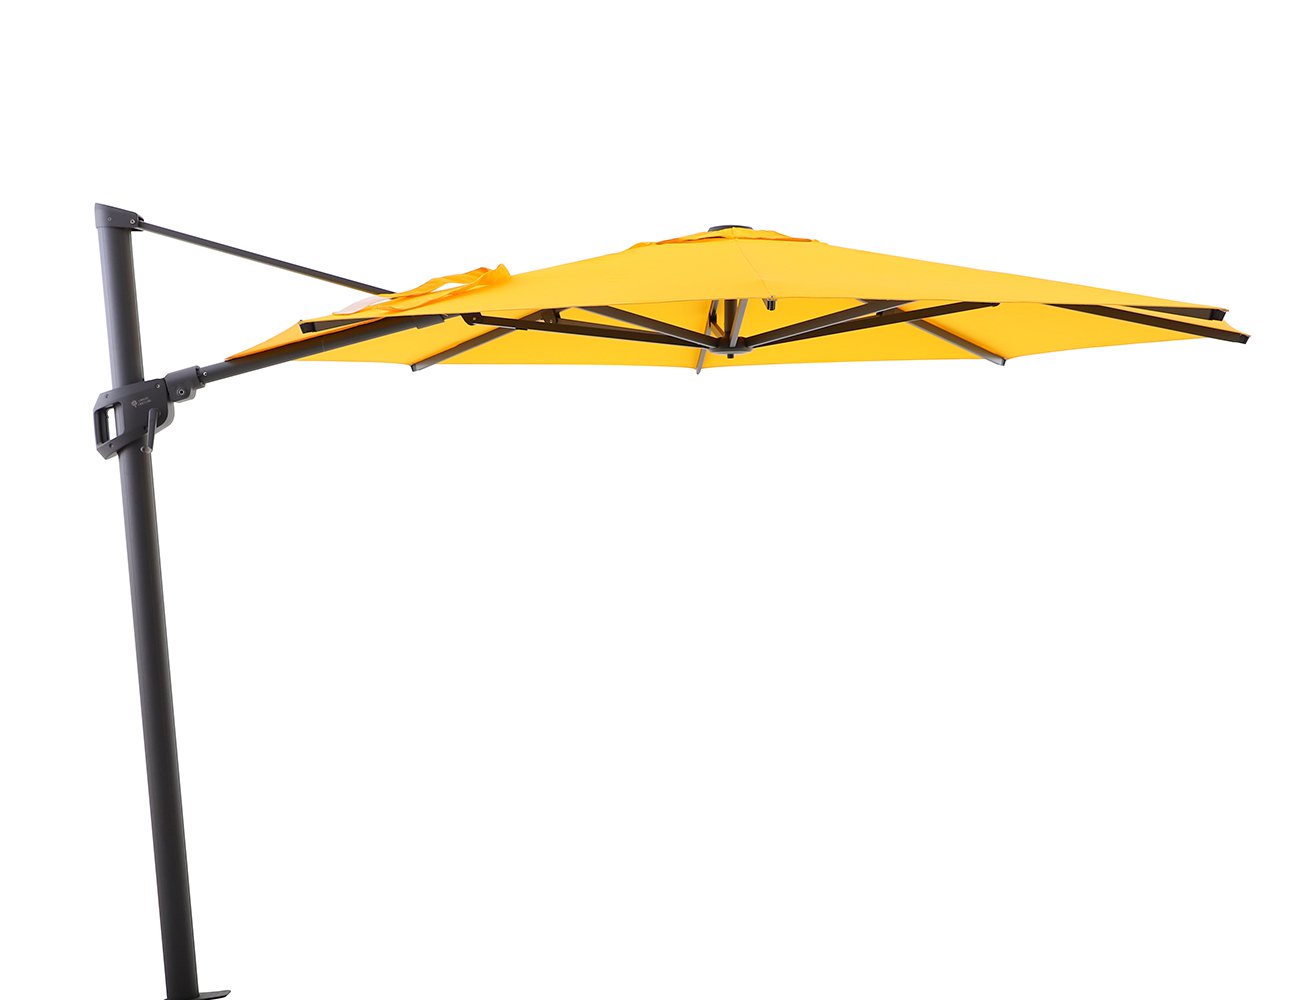 3m Cantilever Octagonal Umbrella - Yellow